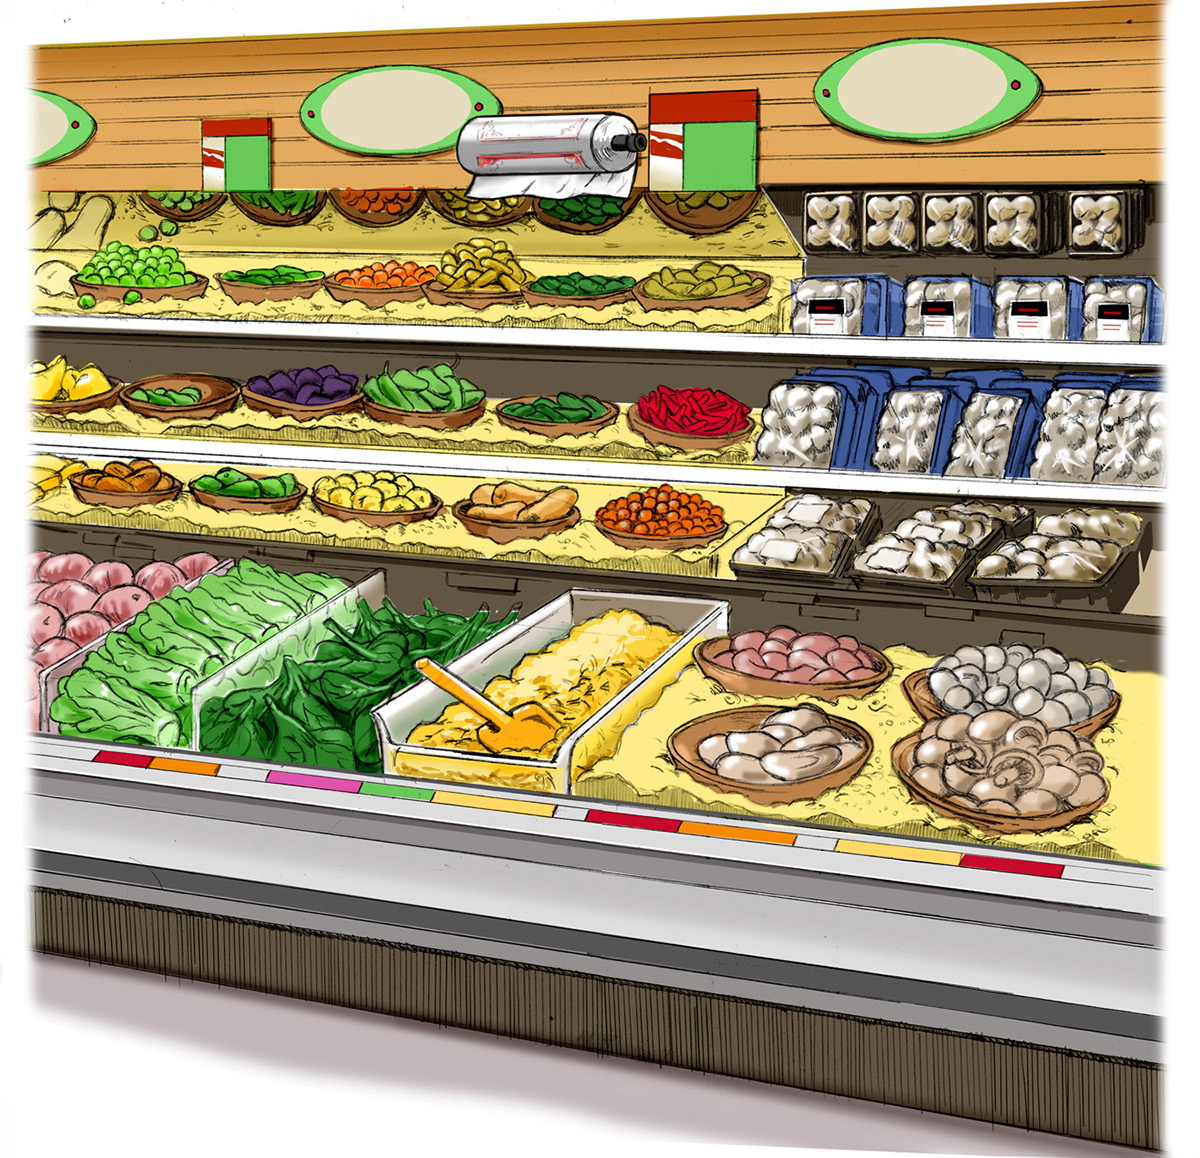 Grocery store Planogram vegetables retail environment merchandising Cartoons planograms endcaps Displays Consumer goods Promotion Point-of-sale